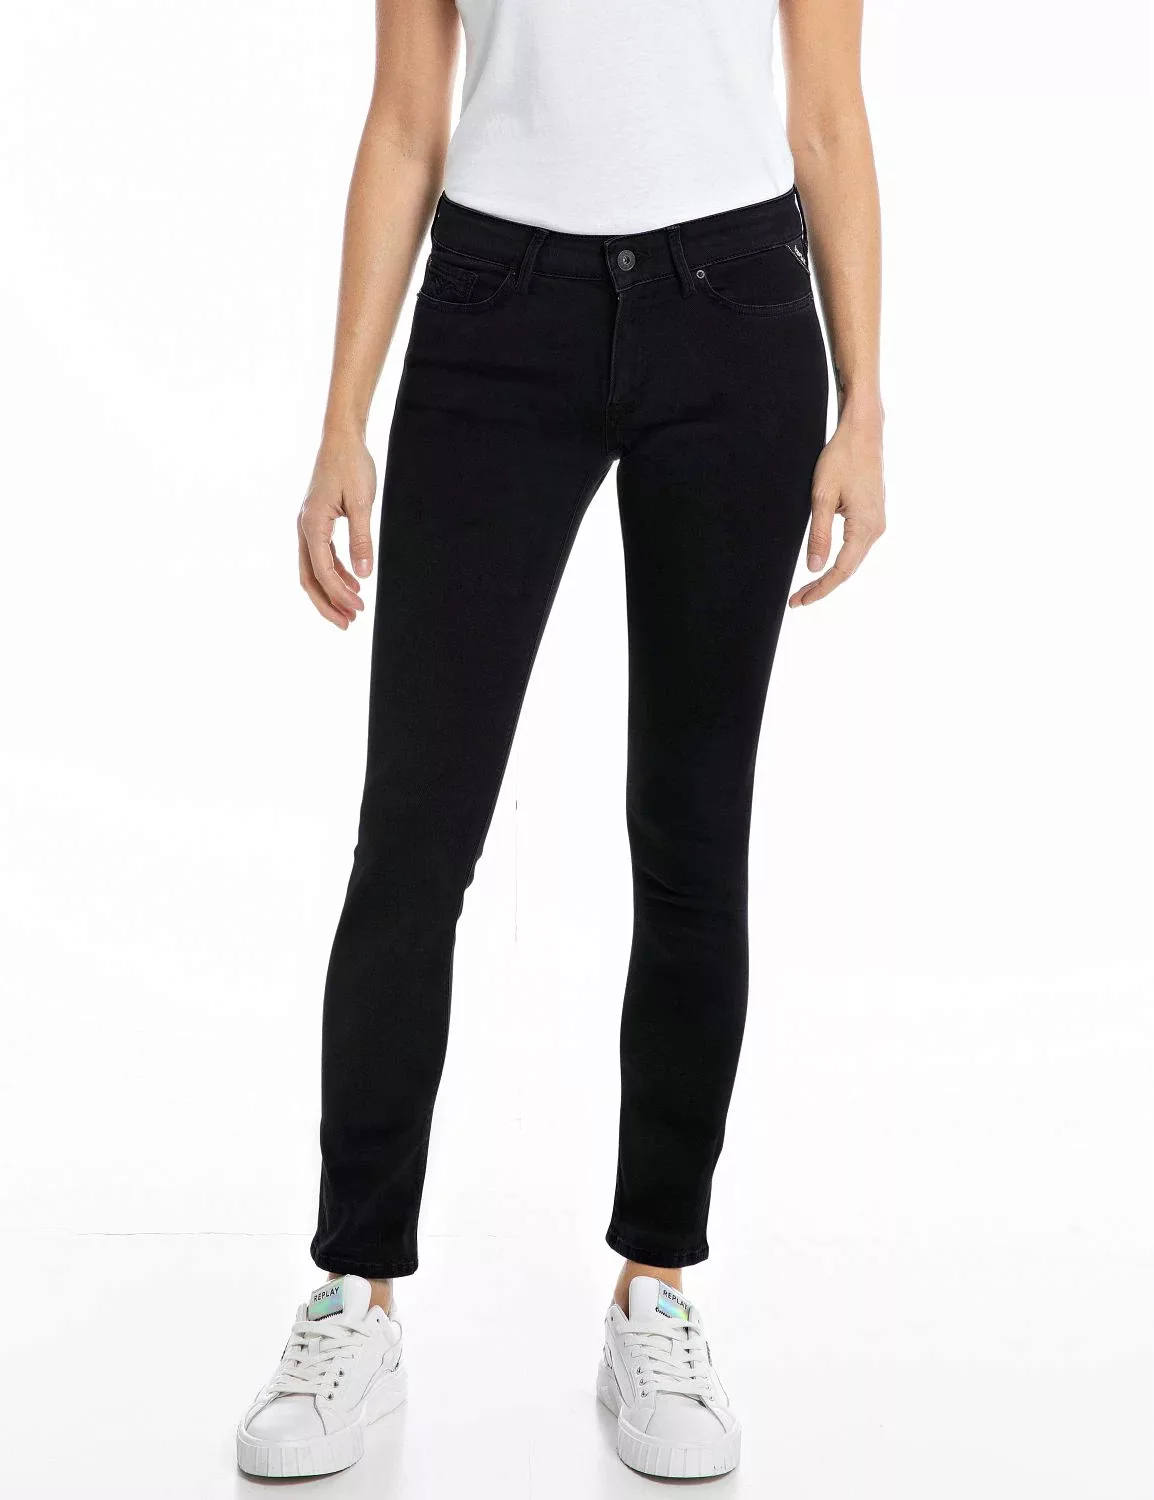 Replay Damen Jeans Jeanshose NEW LUZ - Skinny Fit Schwarz - Black Denim günstig online kaufen